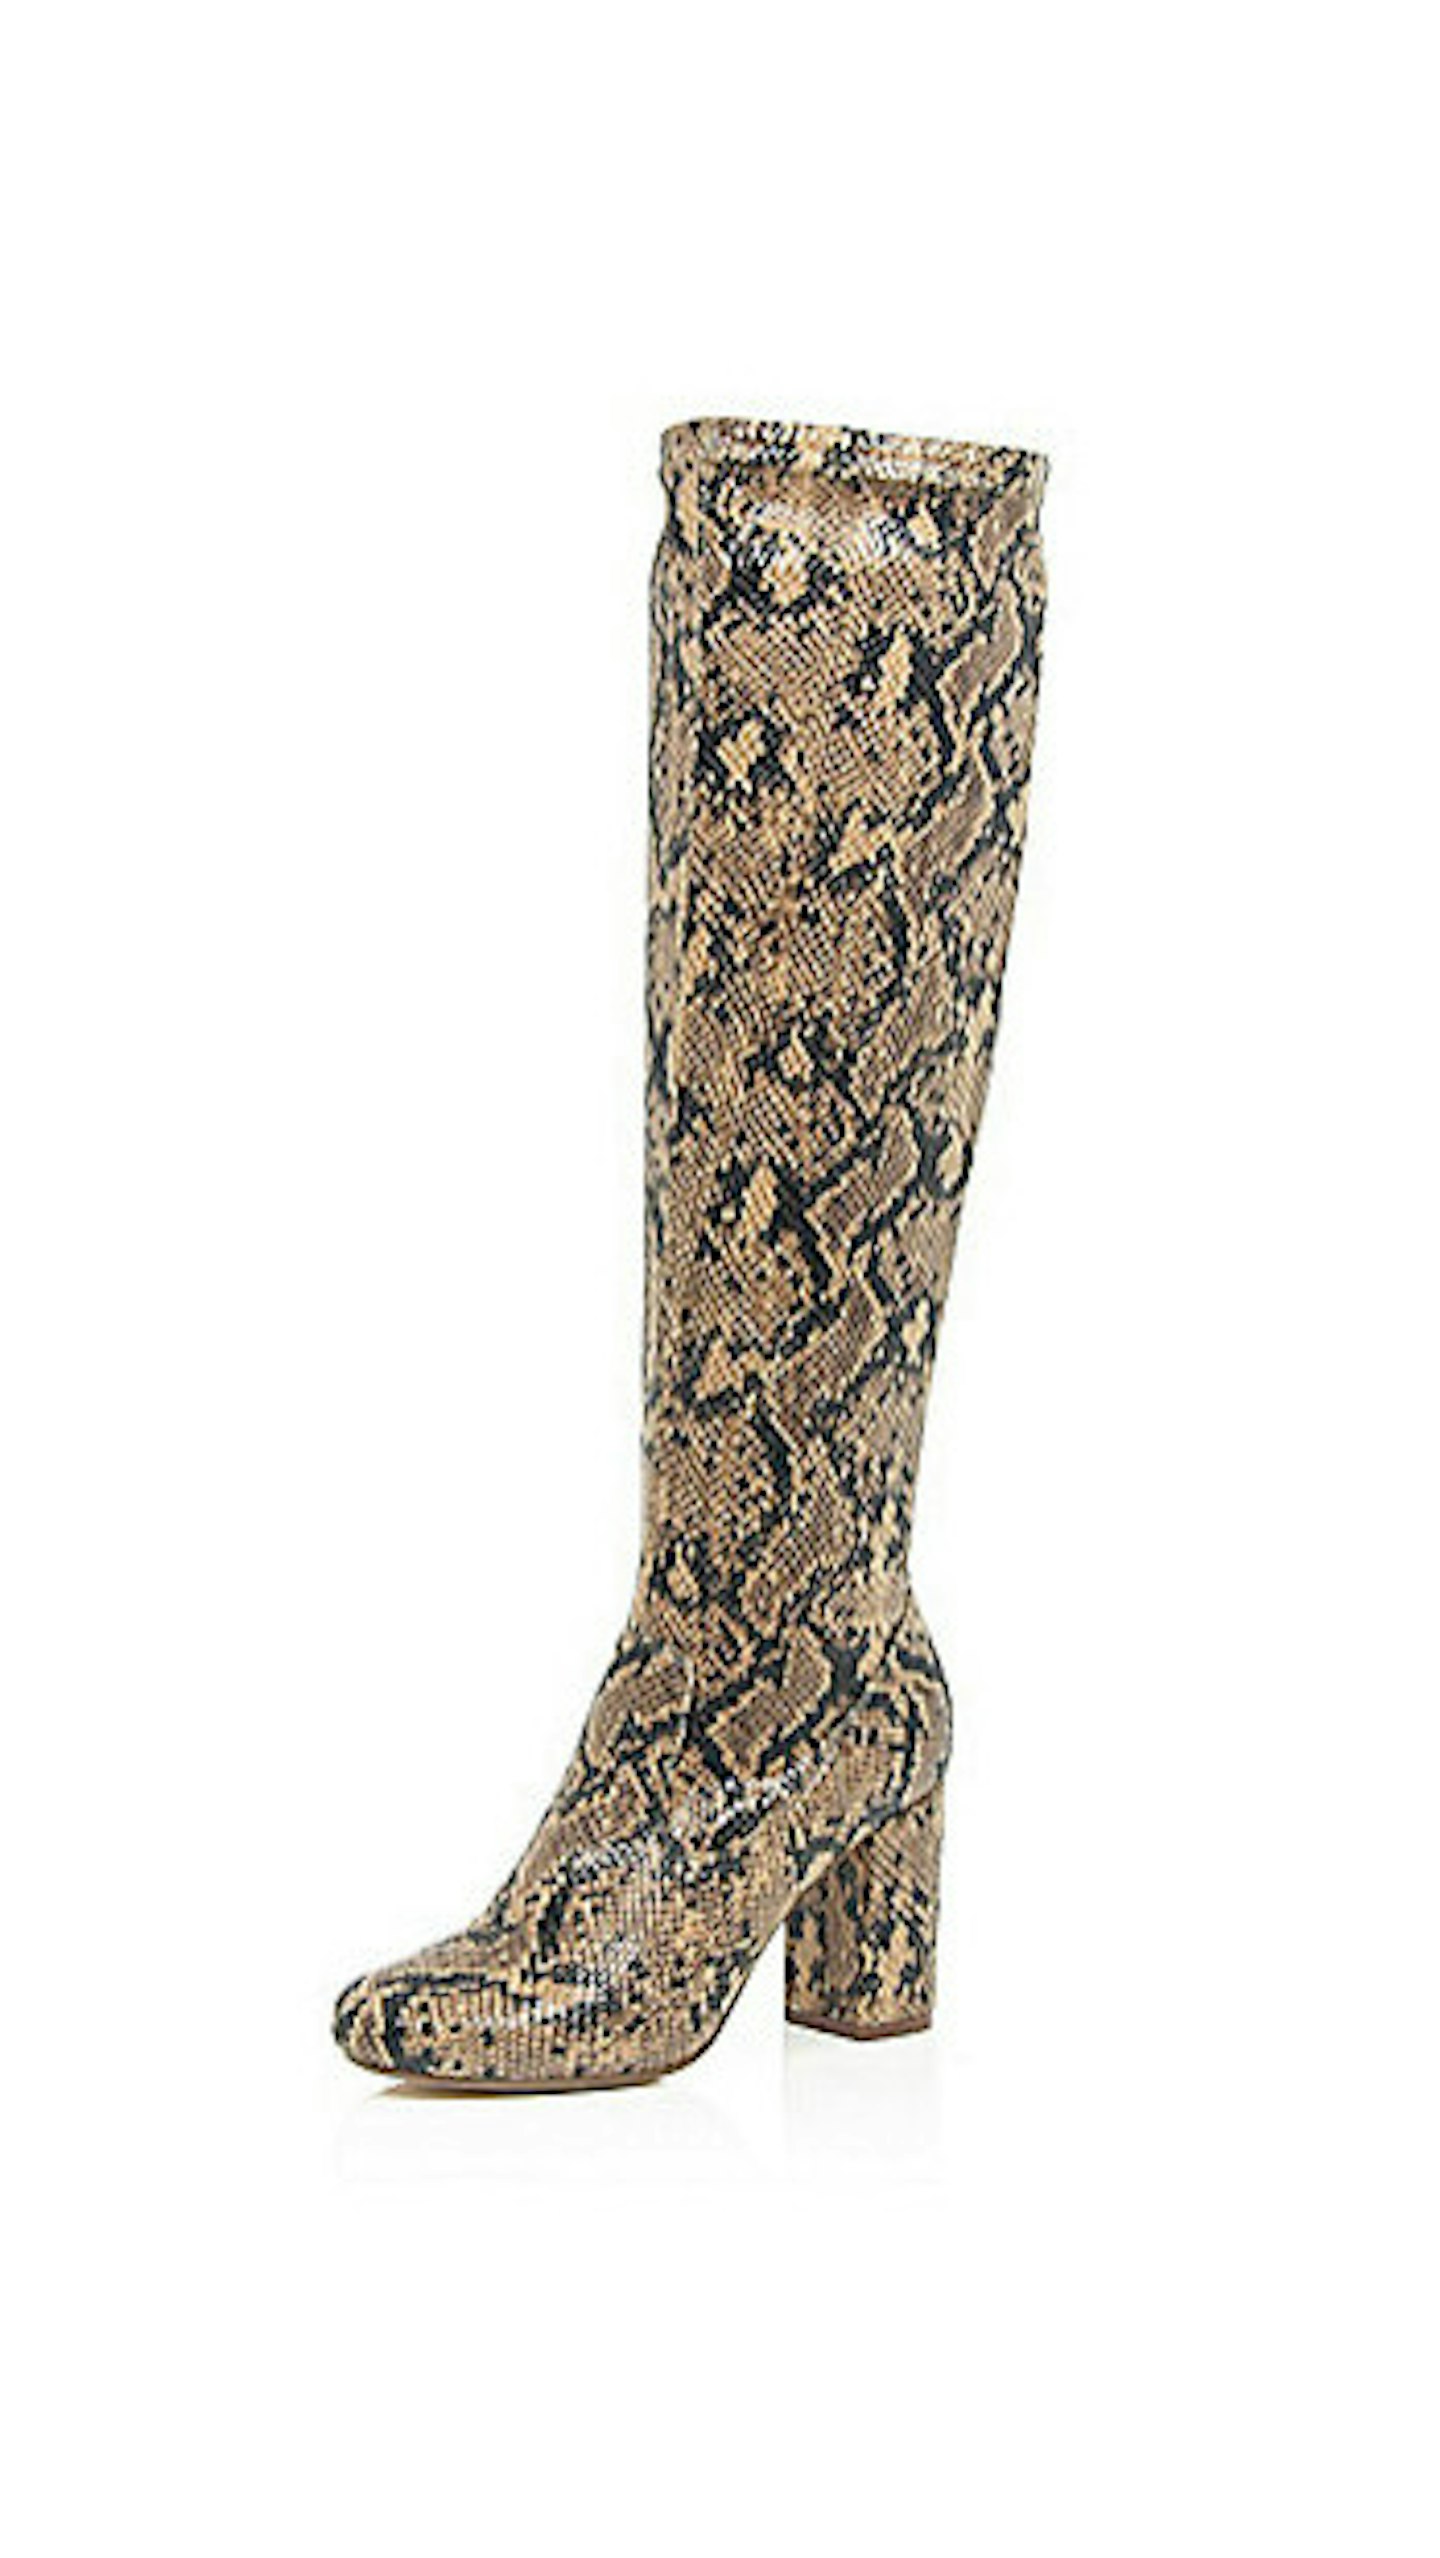 Beige snake print heeled knee high boots, £75